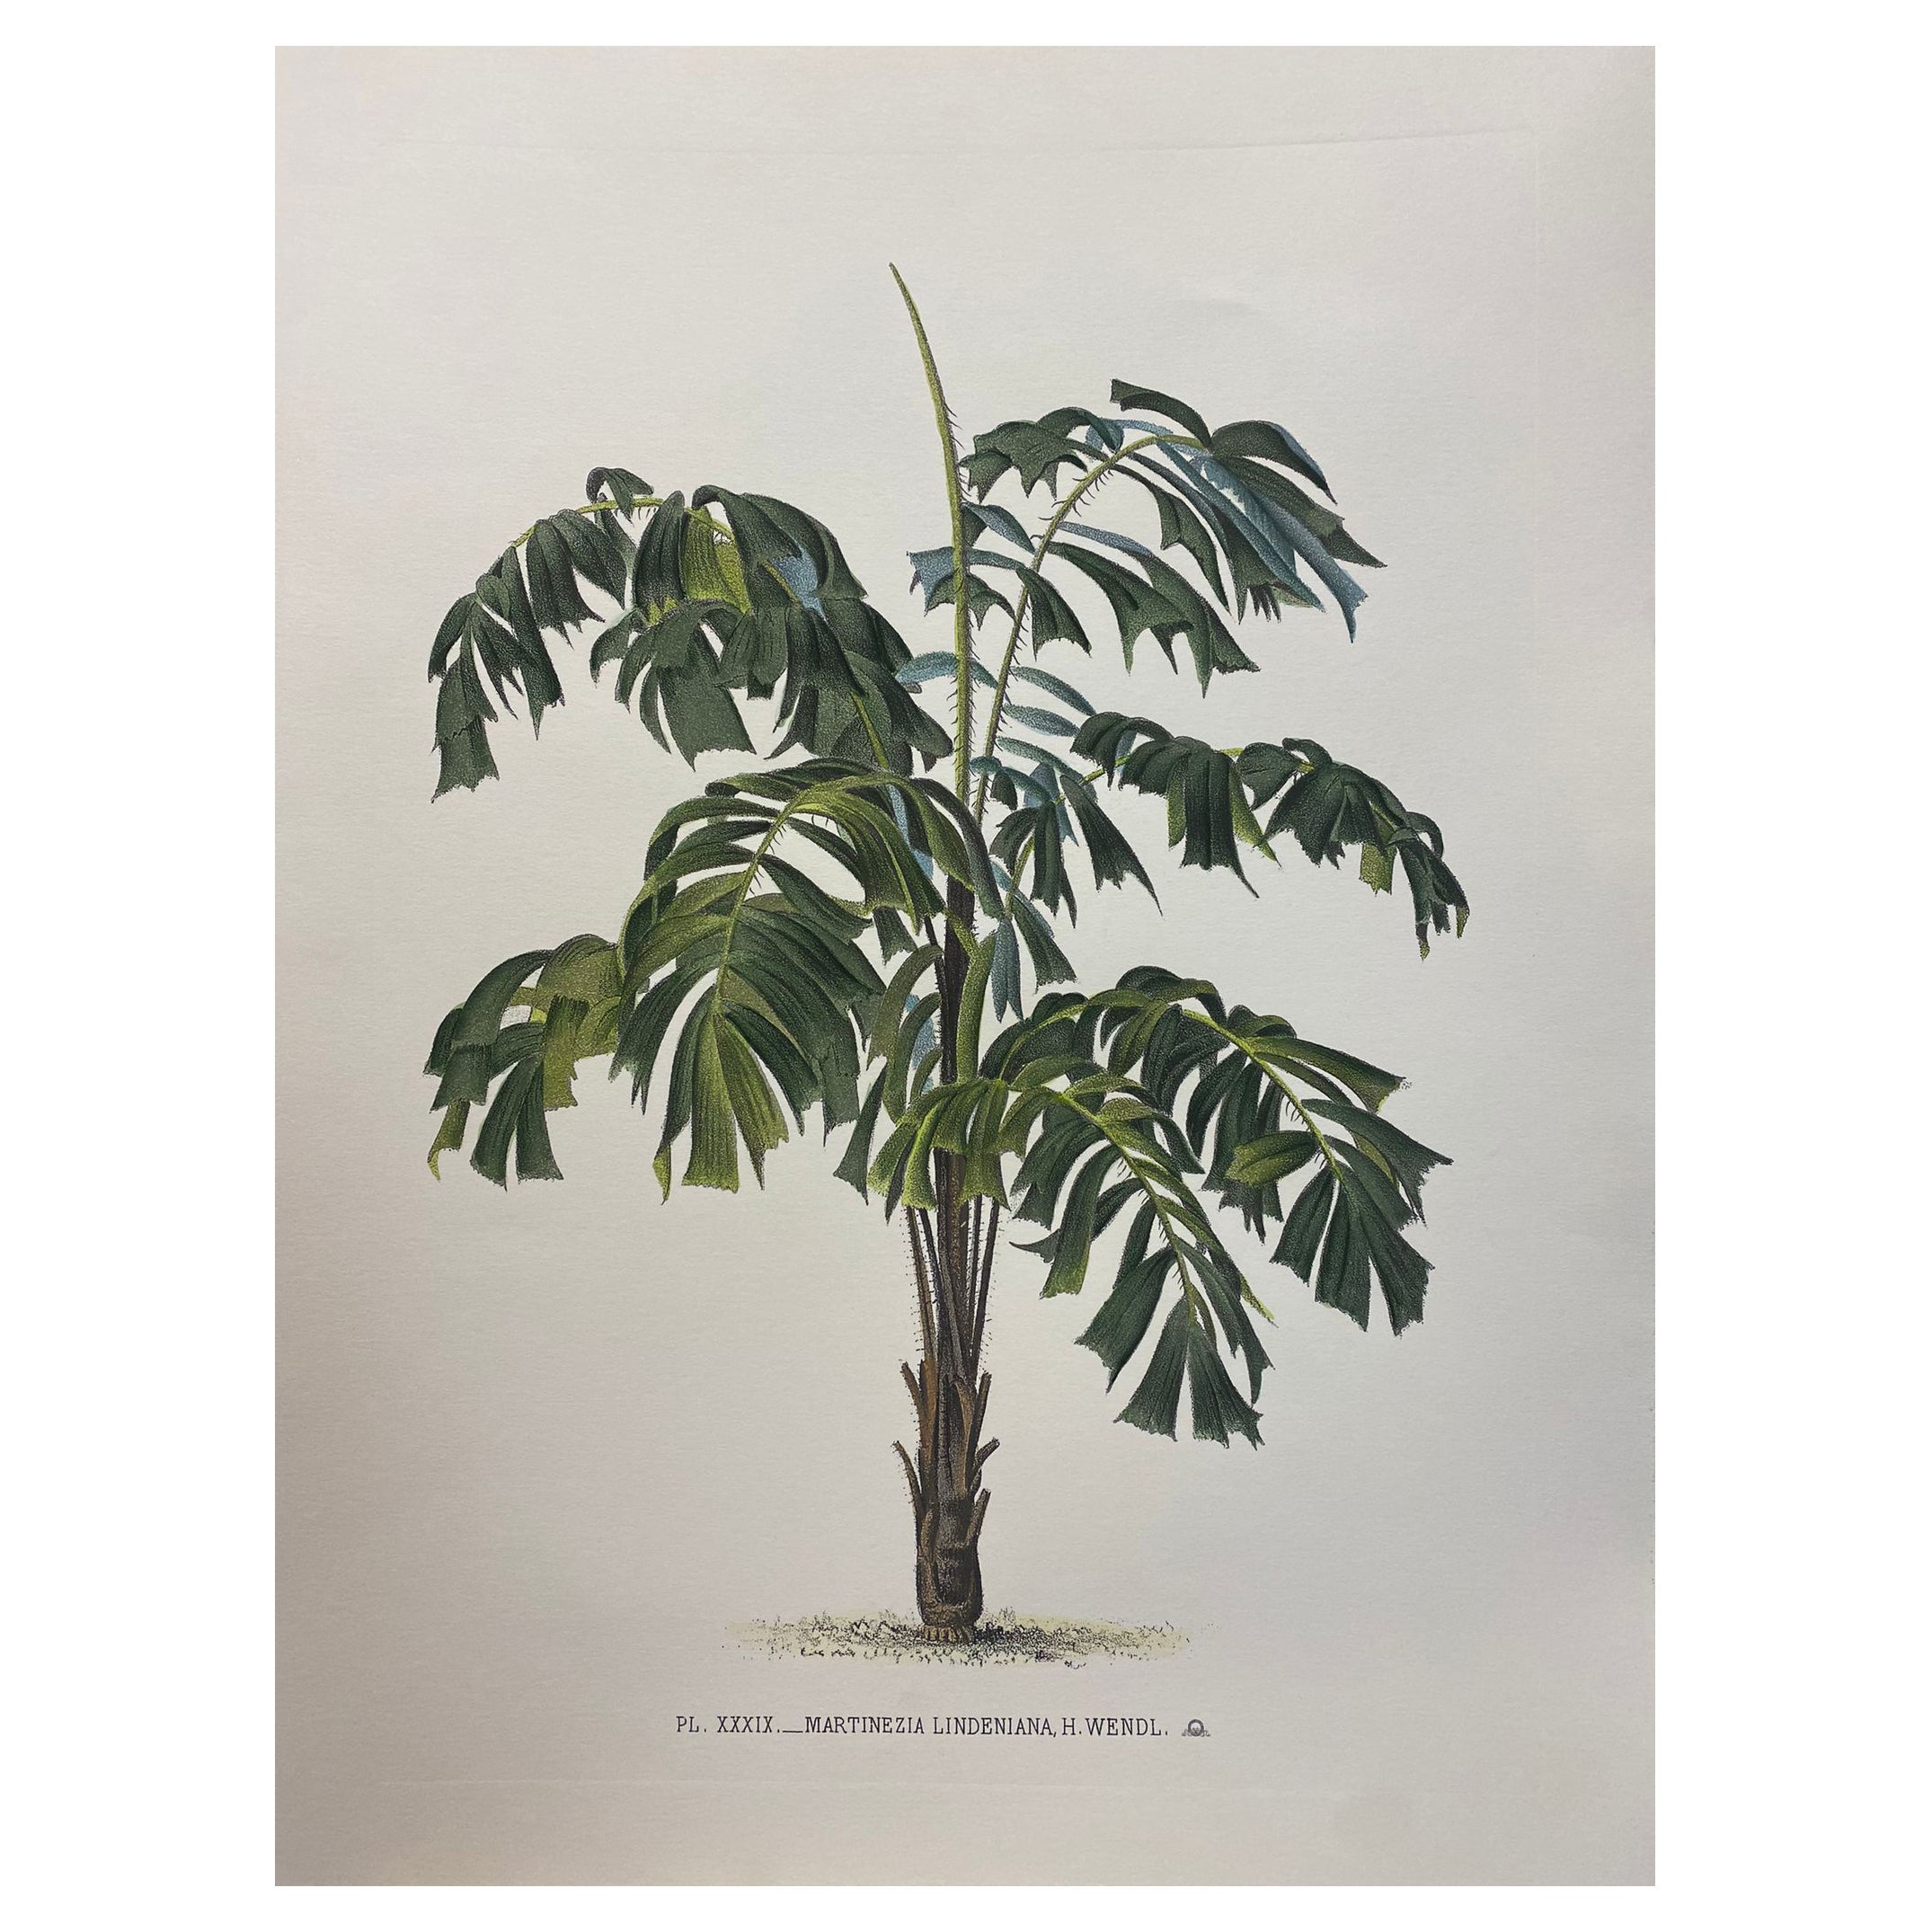 Italian Contemporary Hand Painted Botanical Print "Martinezia Lindeniana" 1 of 2 For Sale